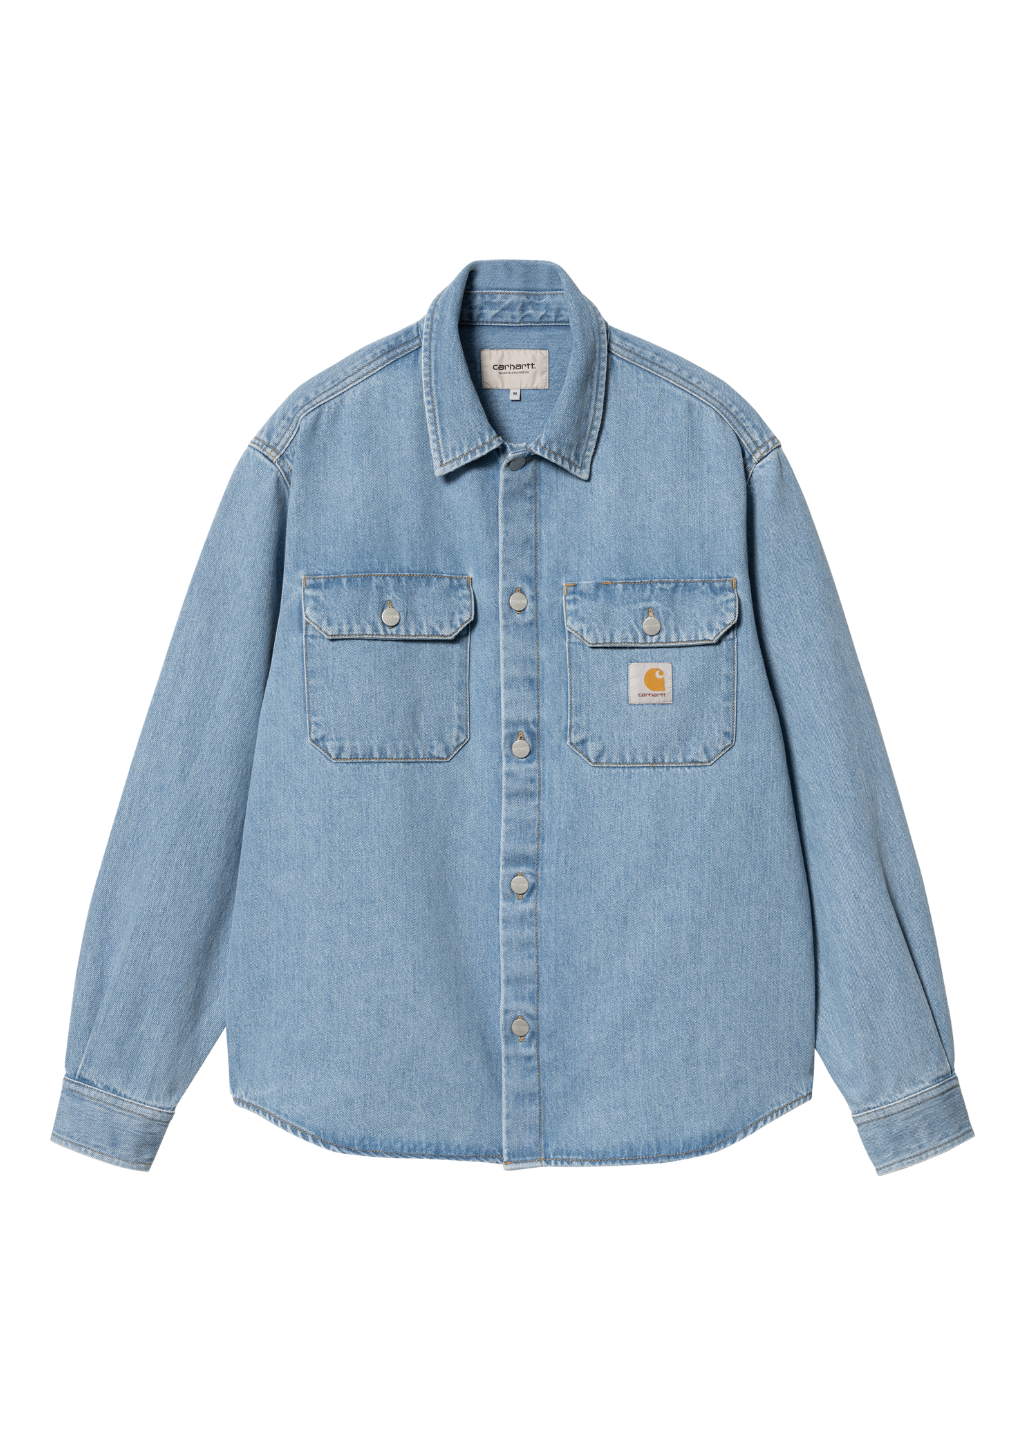 Carhartt WIP - Harvey Shirt Jacket - Blue Stone Bleached - Hardpressed Print Studio Inc.